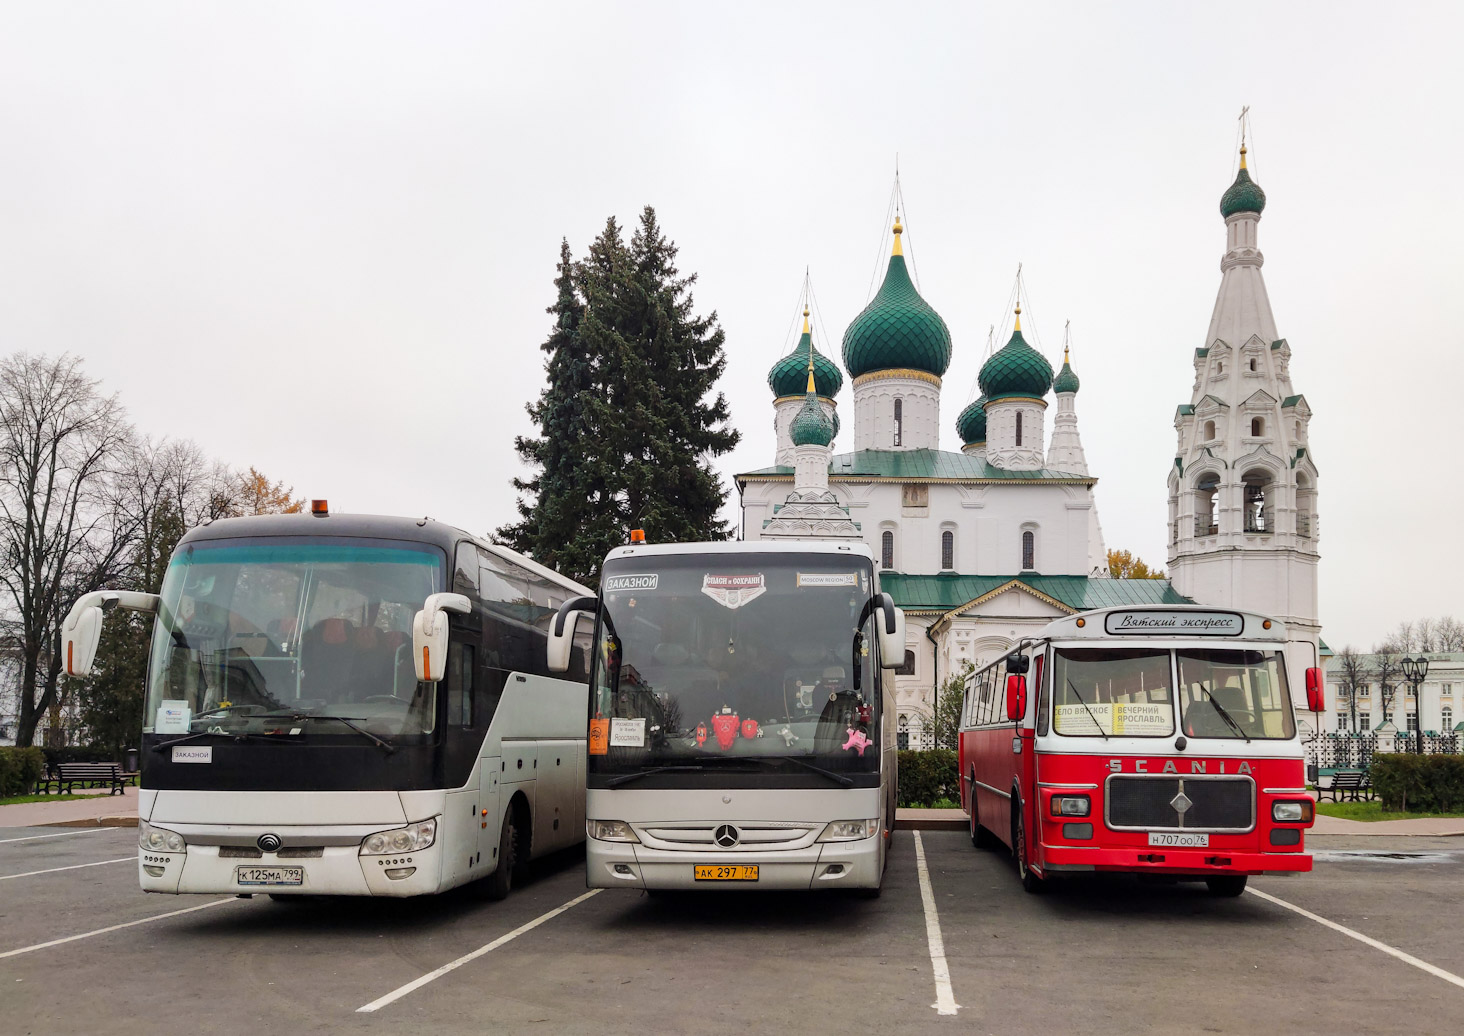 Moskwa, Mercedes-Benz Tourismo II 15RHD Nr АК 297 77; Obwód jarosławski, Repstad Nr Н 707 ОО 76